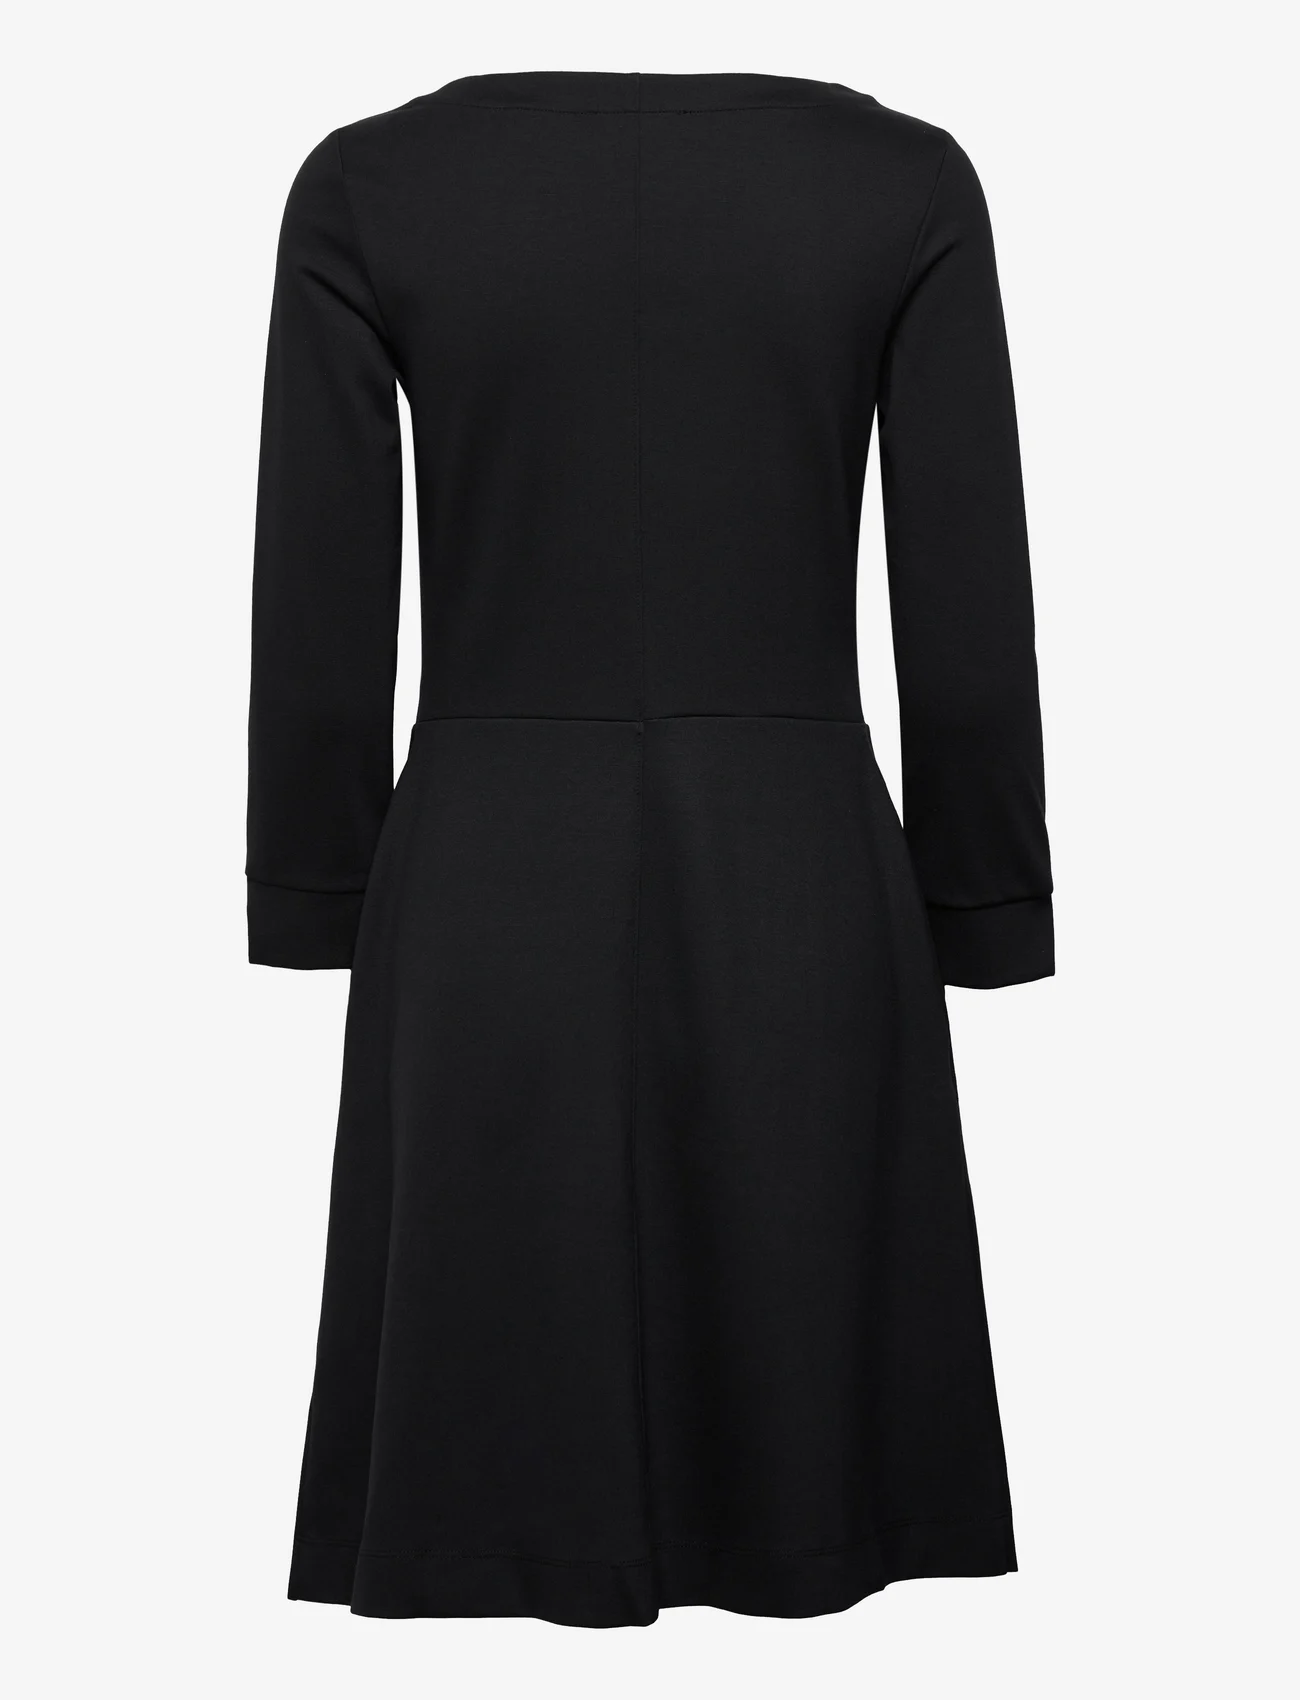 Esprit Casual - Punto mini dress - black - 1